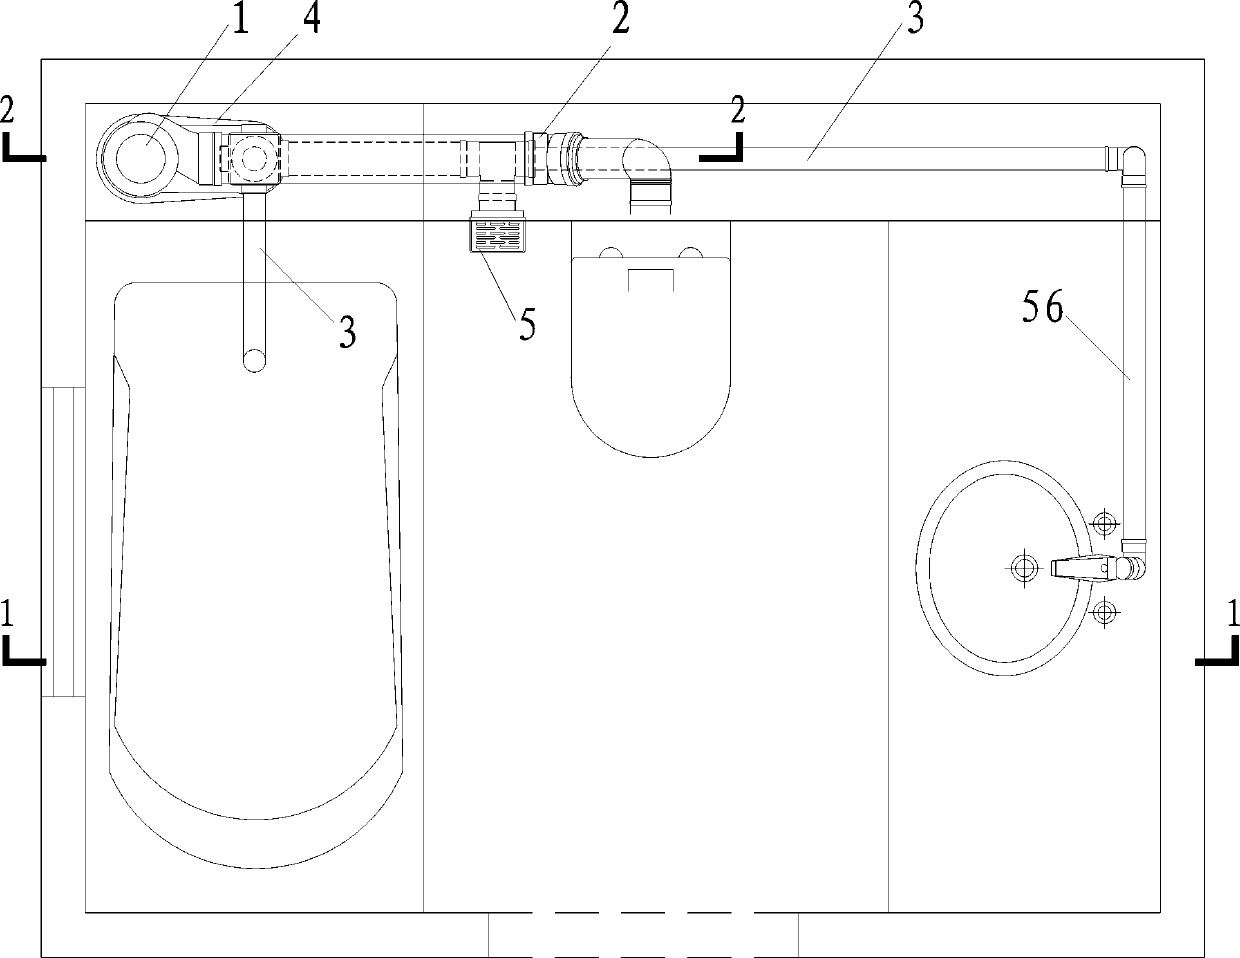 Same-floor drainage system without descending floor slab in bathroom